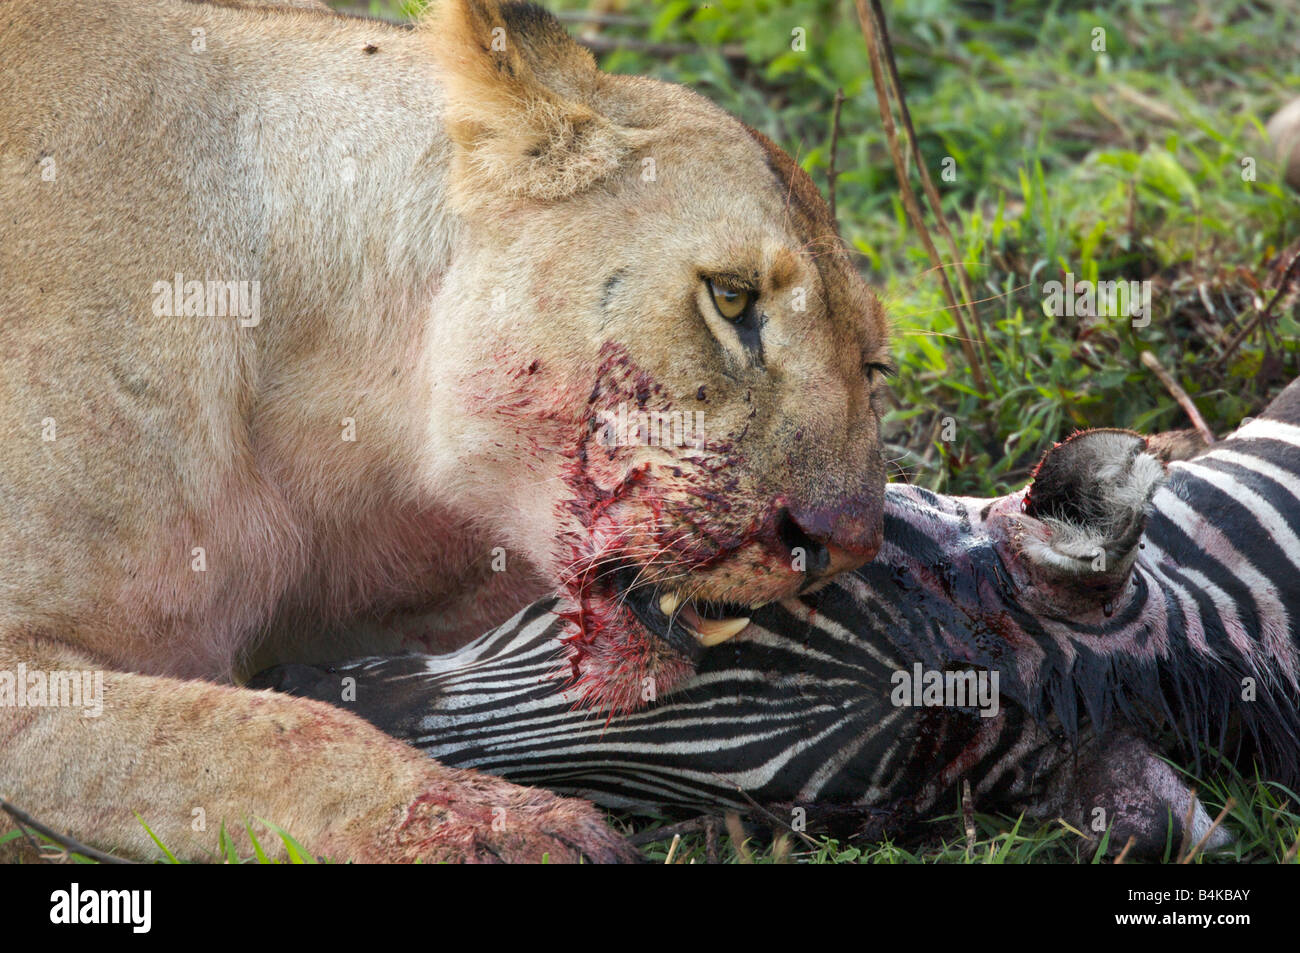 Lion with blood on fur from killing zebra, Masai Mara, Kenya, East Africa Stock Photo